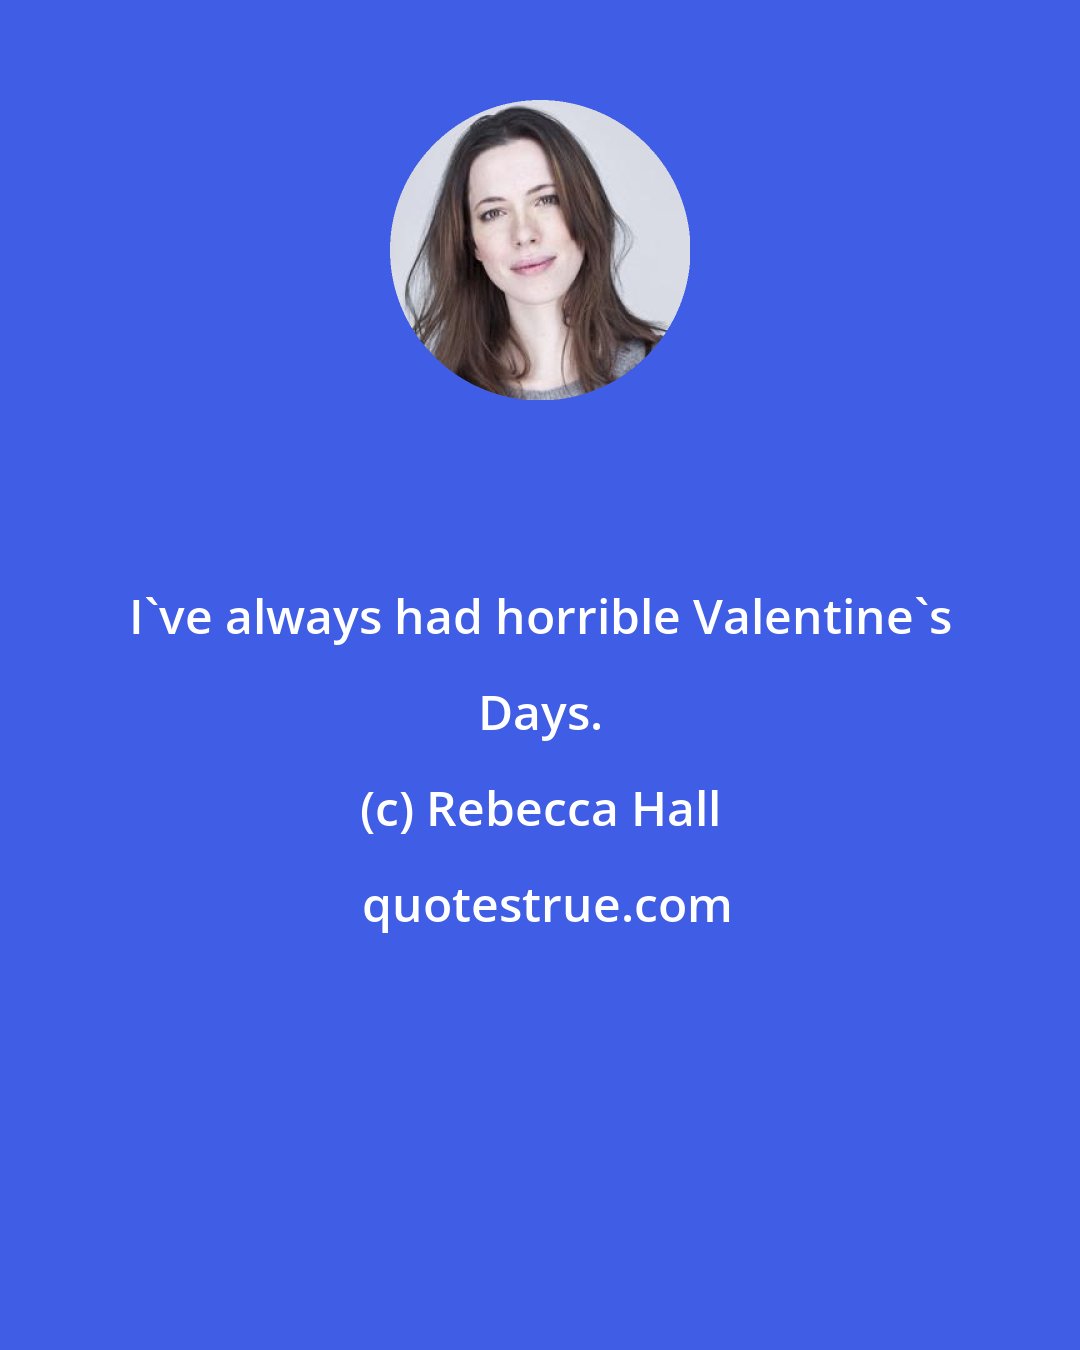 Rebecca Hall: I've always had horrible Valentine's Days.